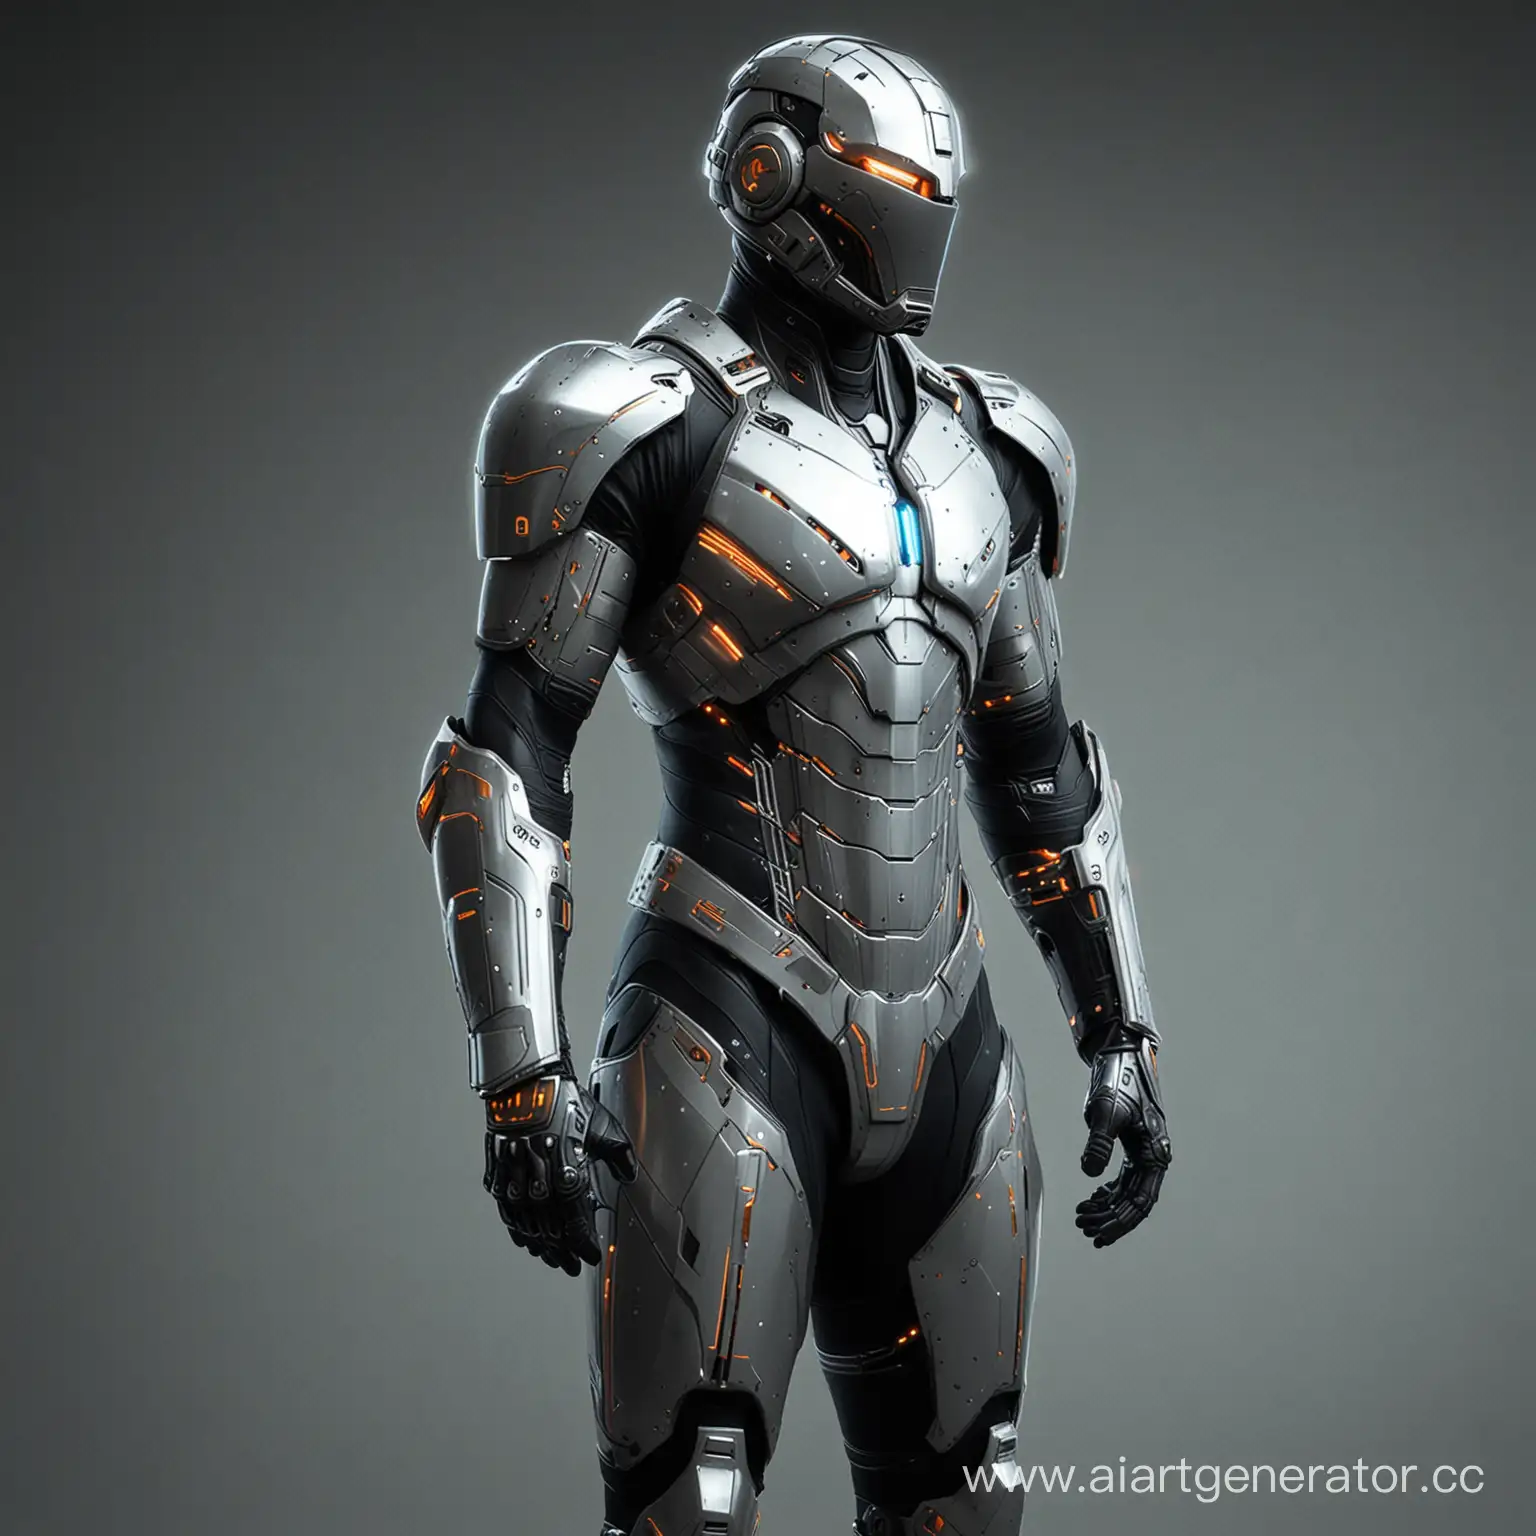 Futuristic-Circuit-Crusader-Armor-Advanced-Technology-and-Flexibility